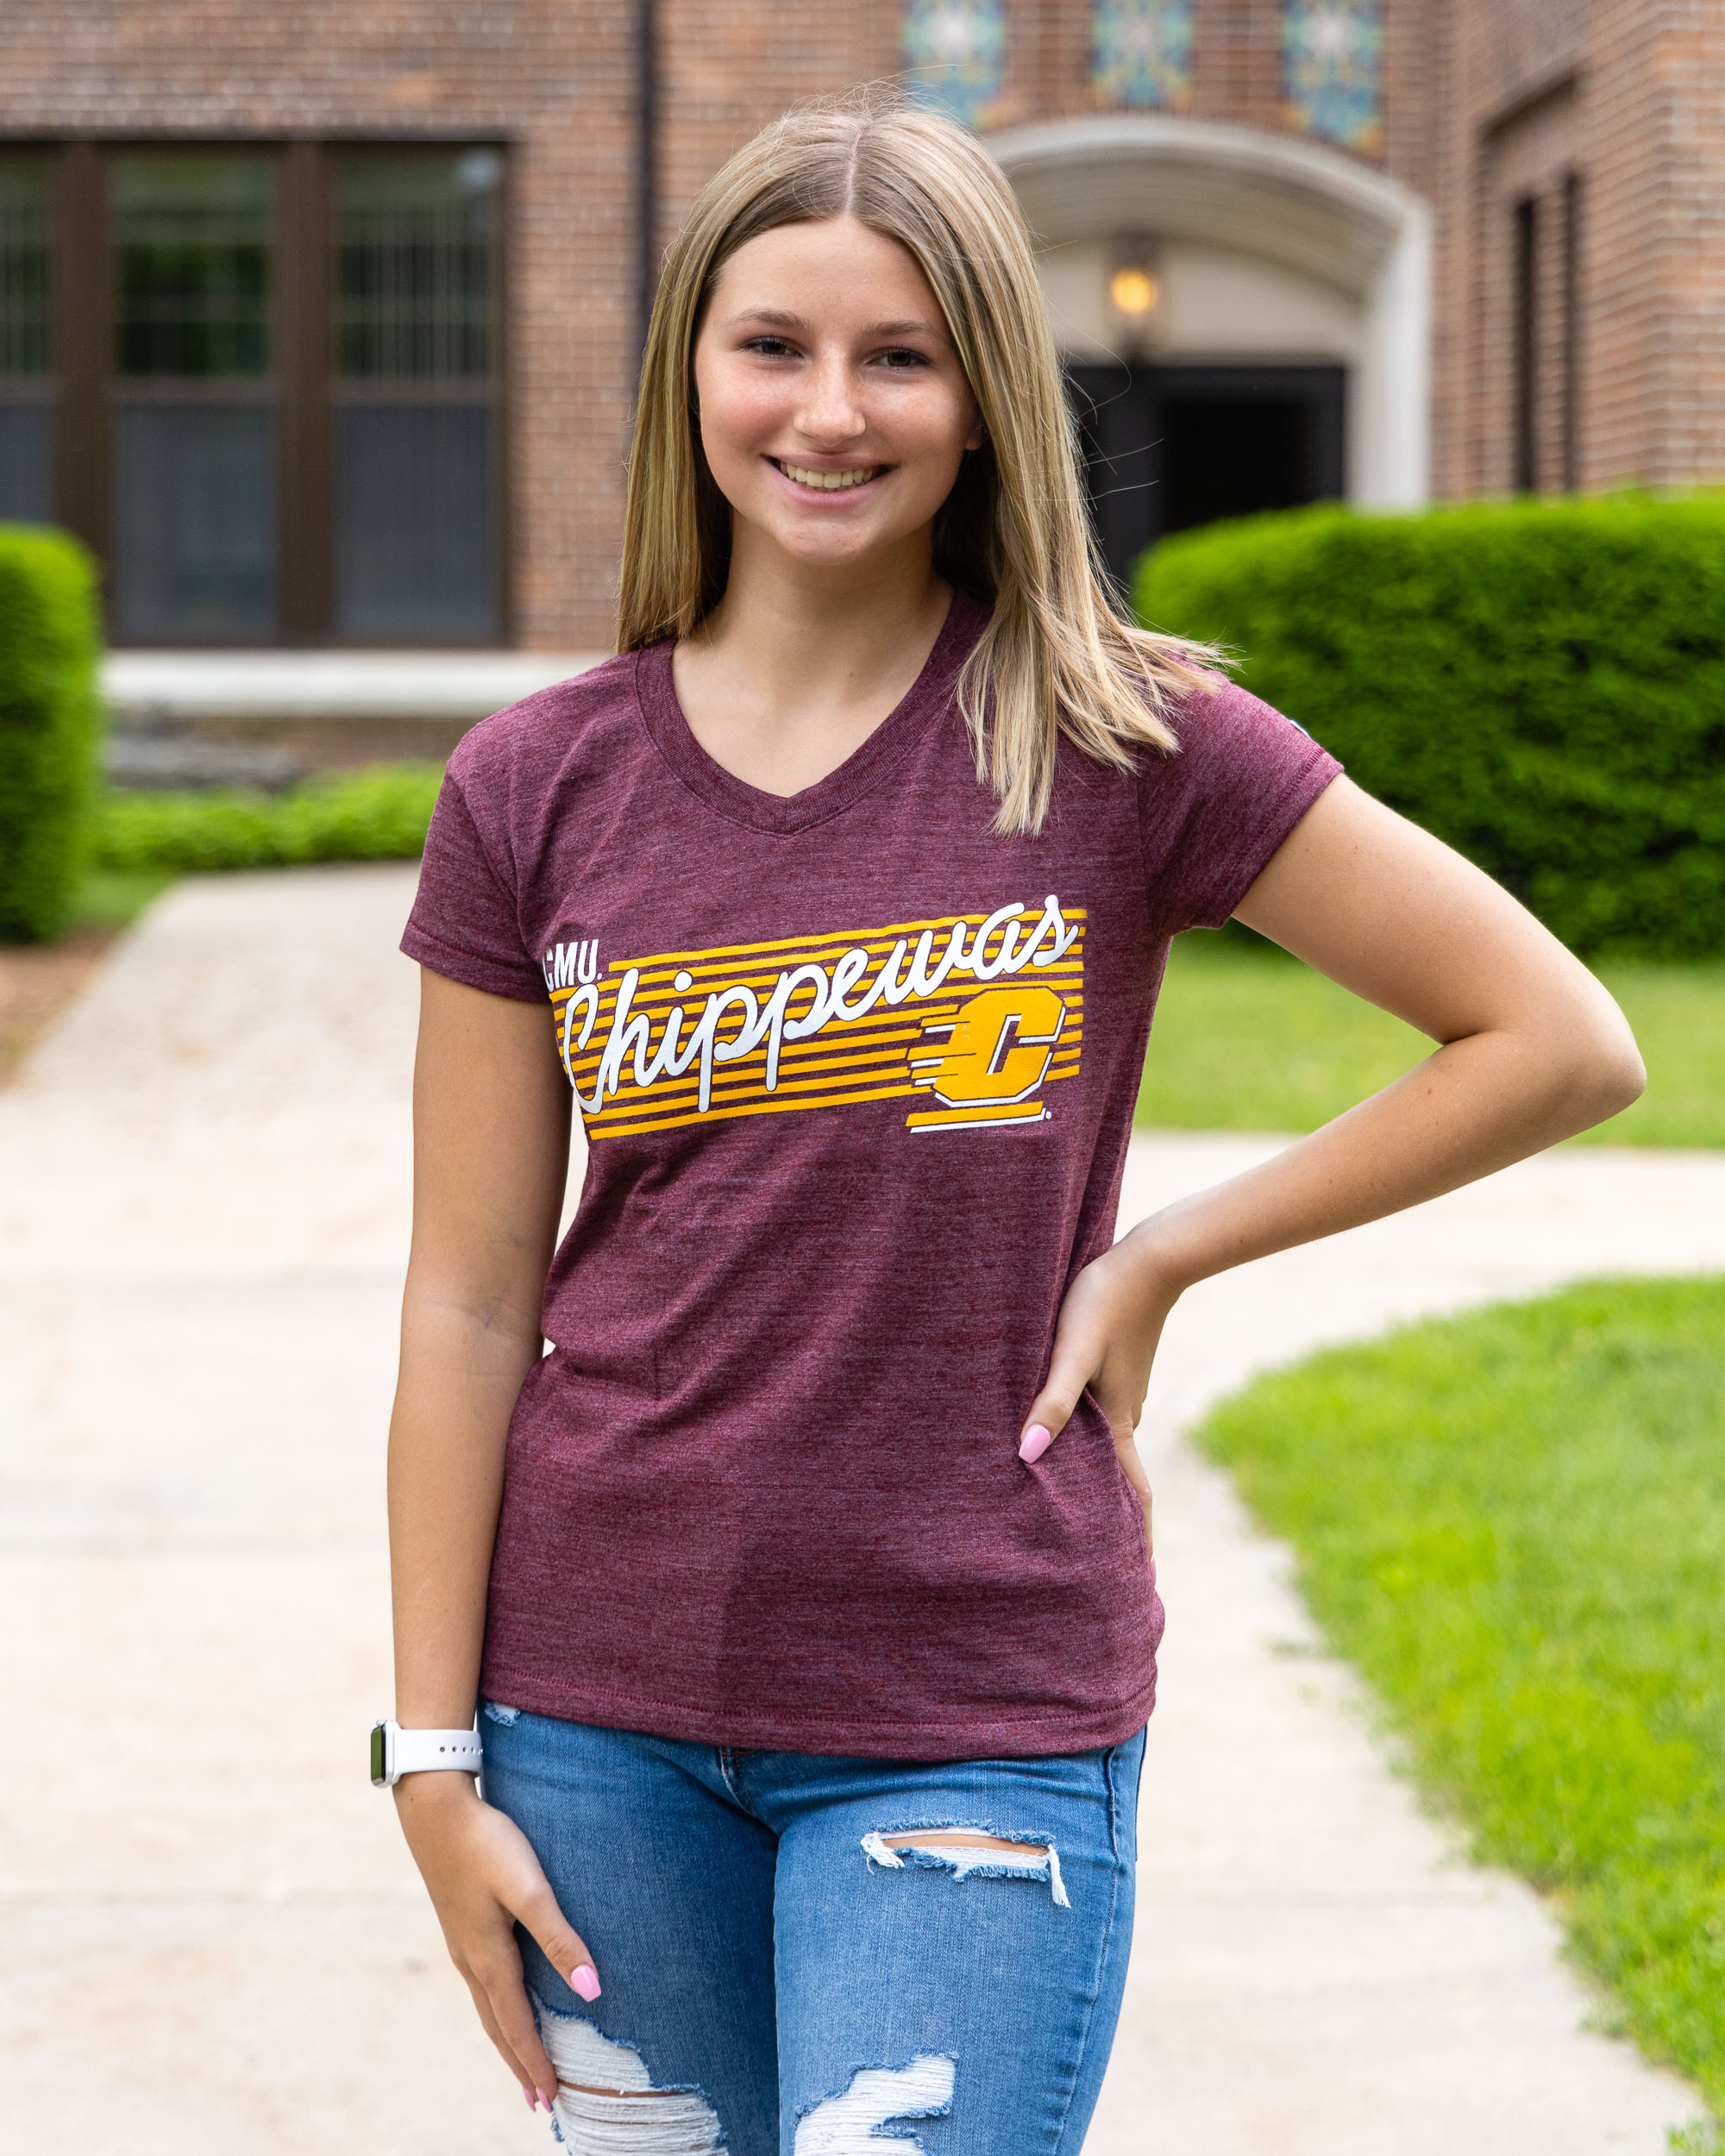 CMU Chippewas Action C Heather Maroon Tri-Blend T-Shirt<br><brand>CHAMPION</brand>